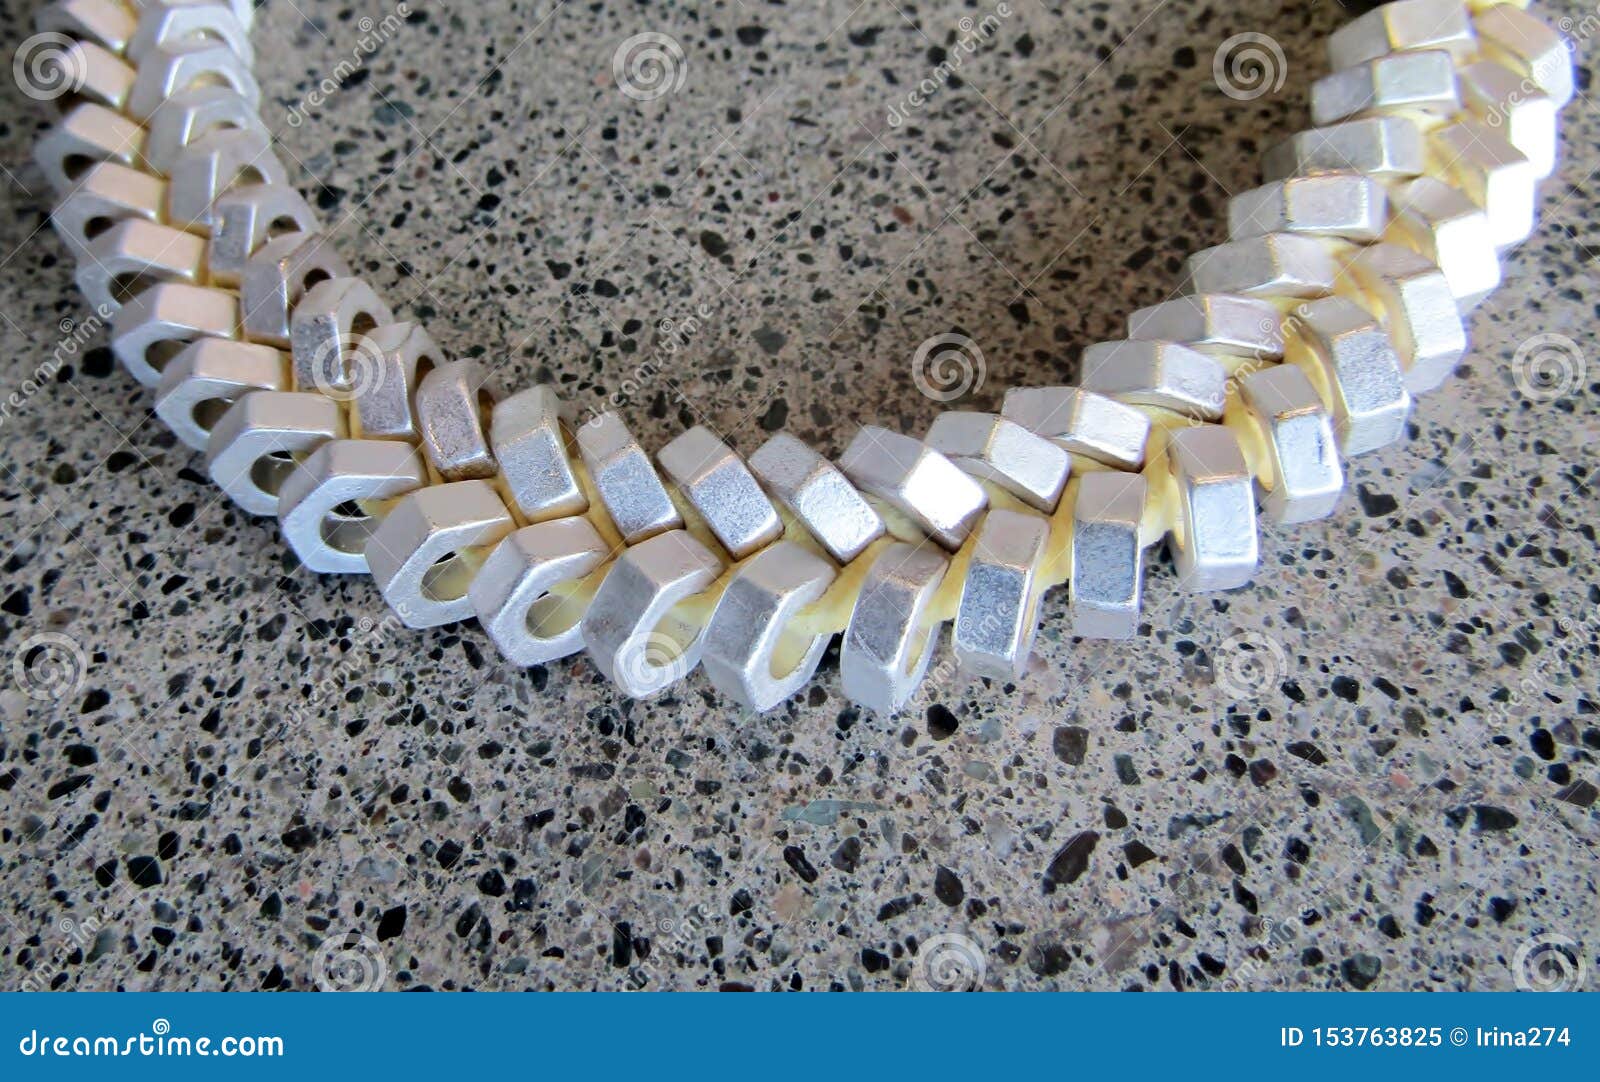 Detail of Braided Hex Nut Bracelet Stock Image  Image of jewelry macro  153763825